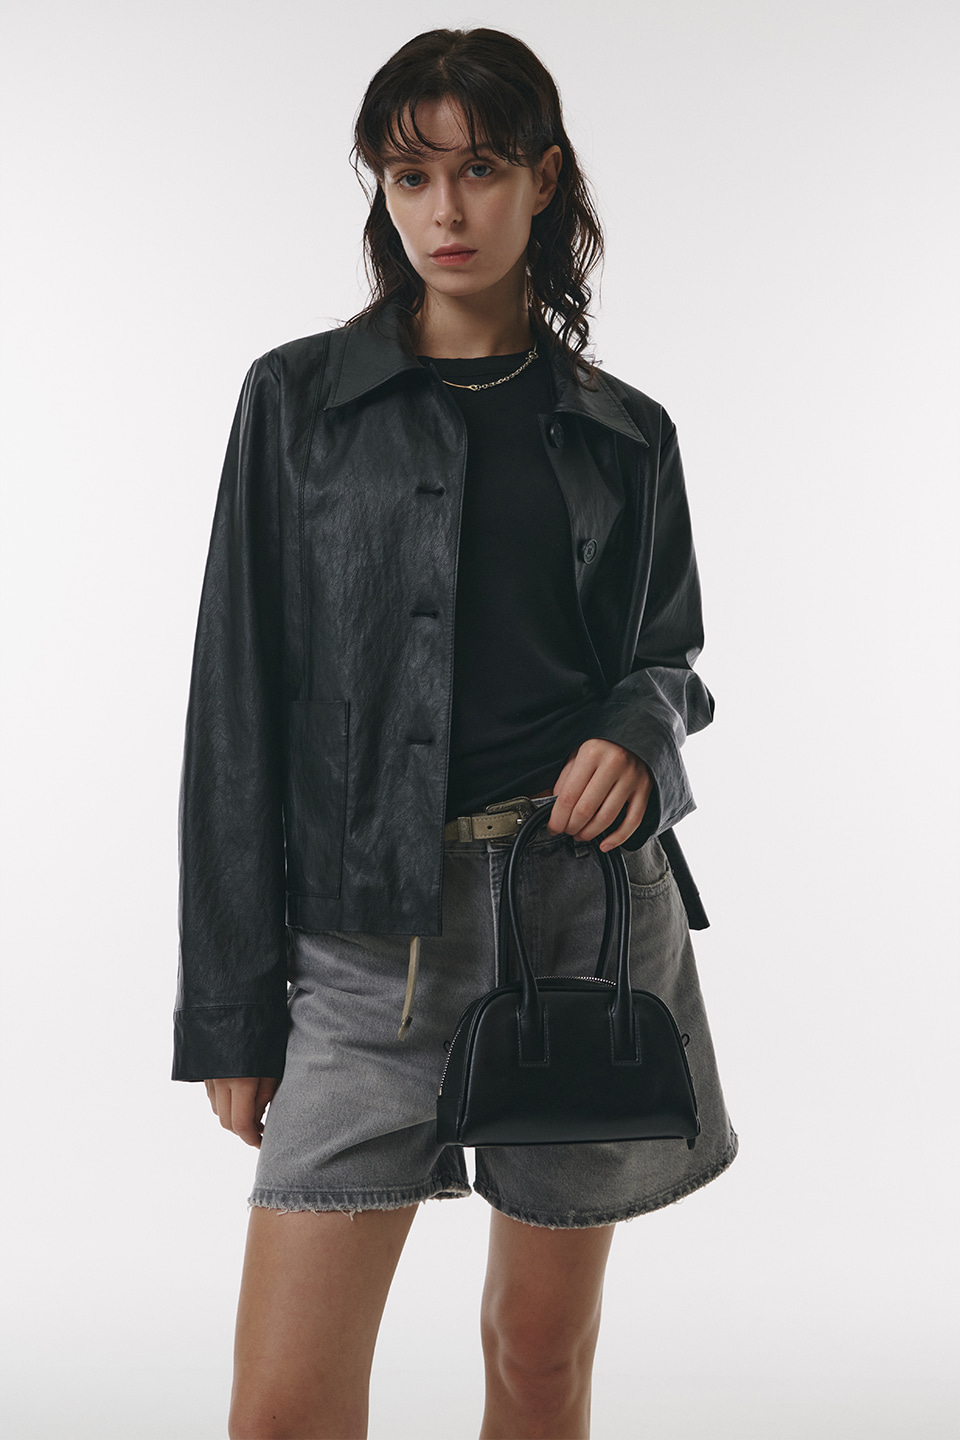 Rosee Bag mini in Black